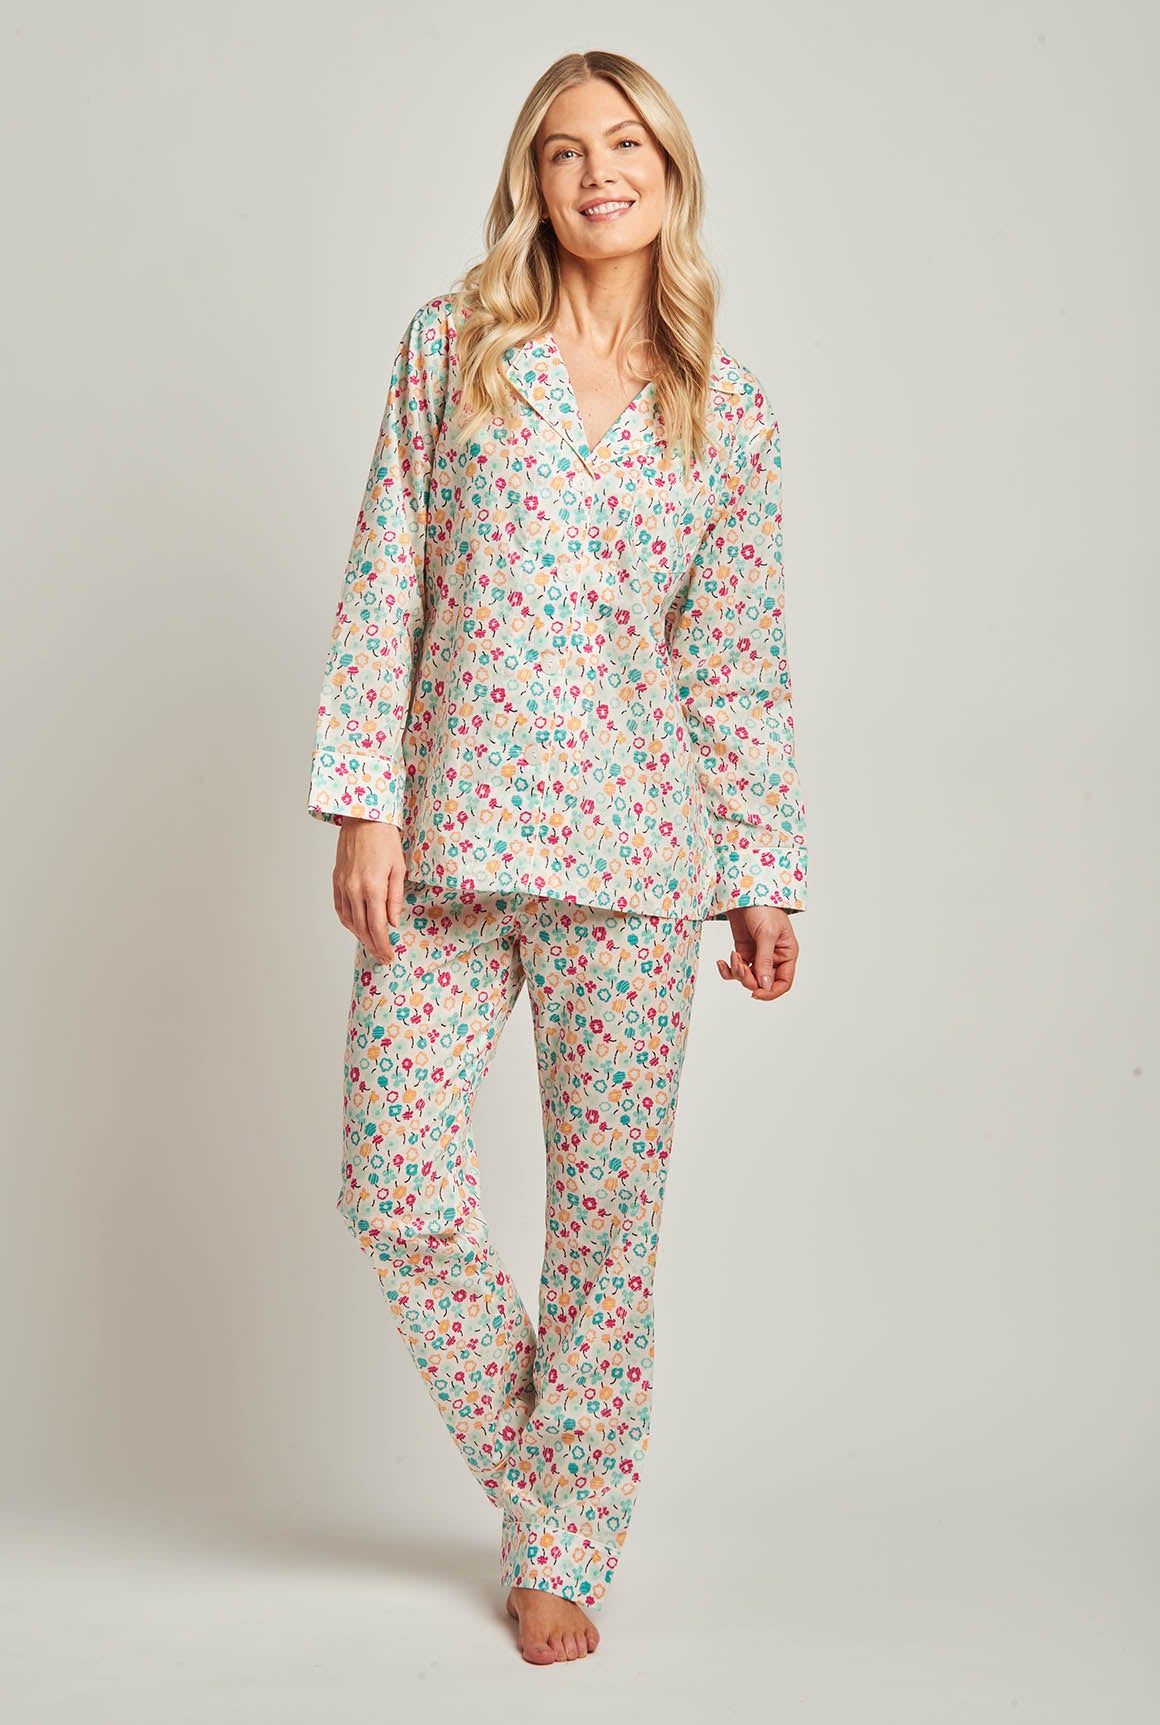 Cotton Voile Pajamas for Women, Best Cotton Pajamas